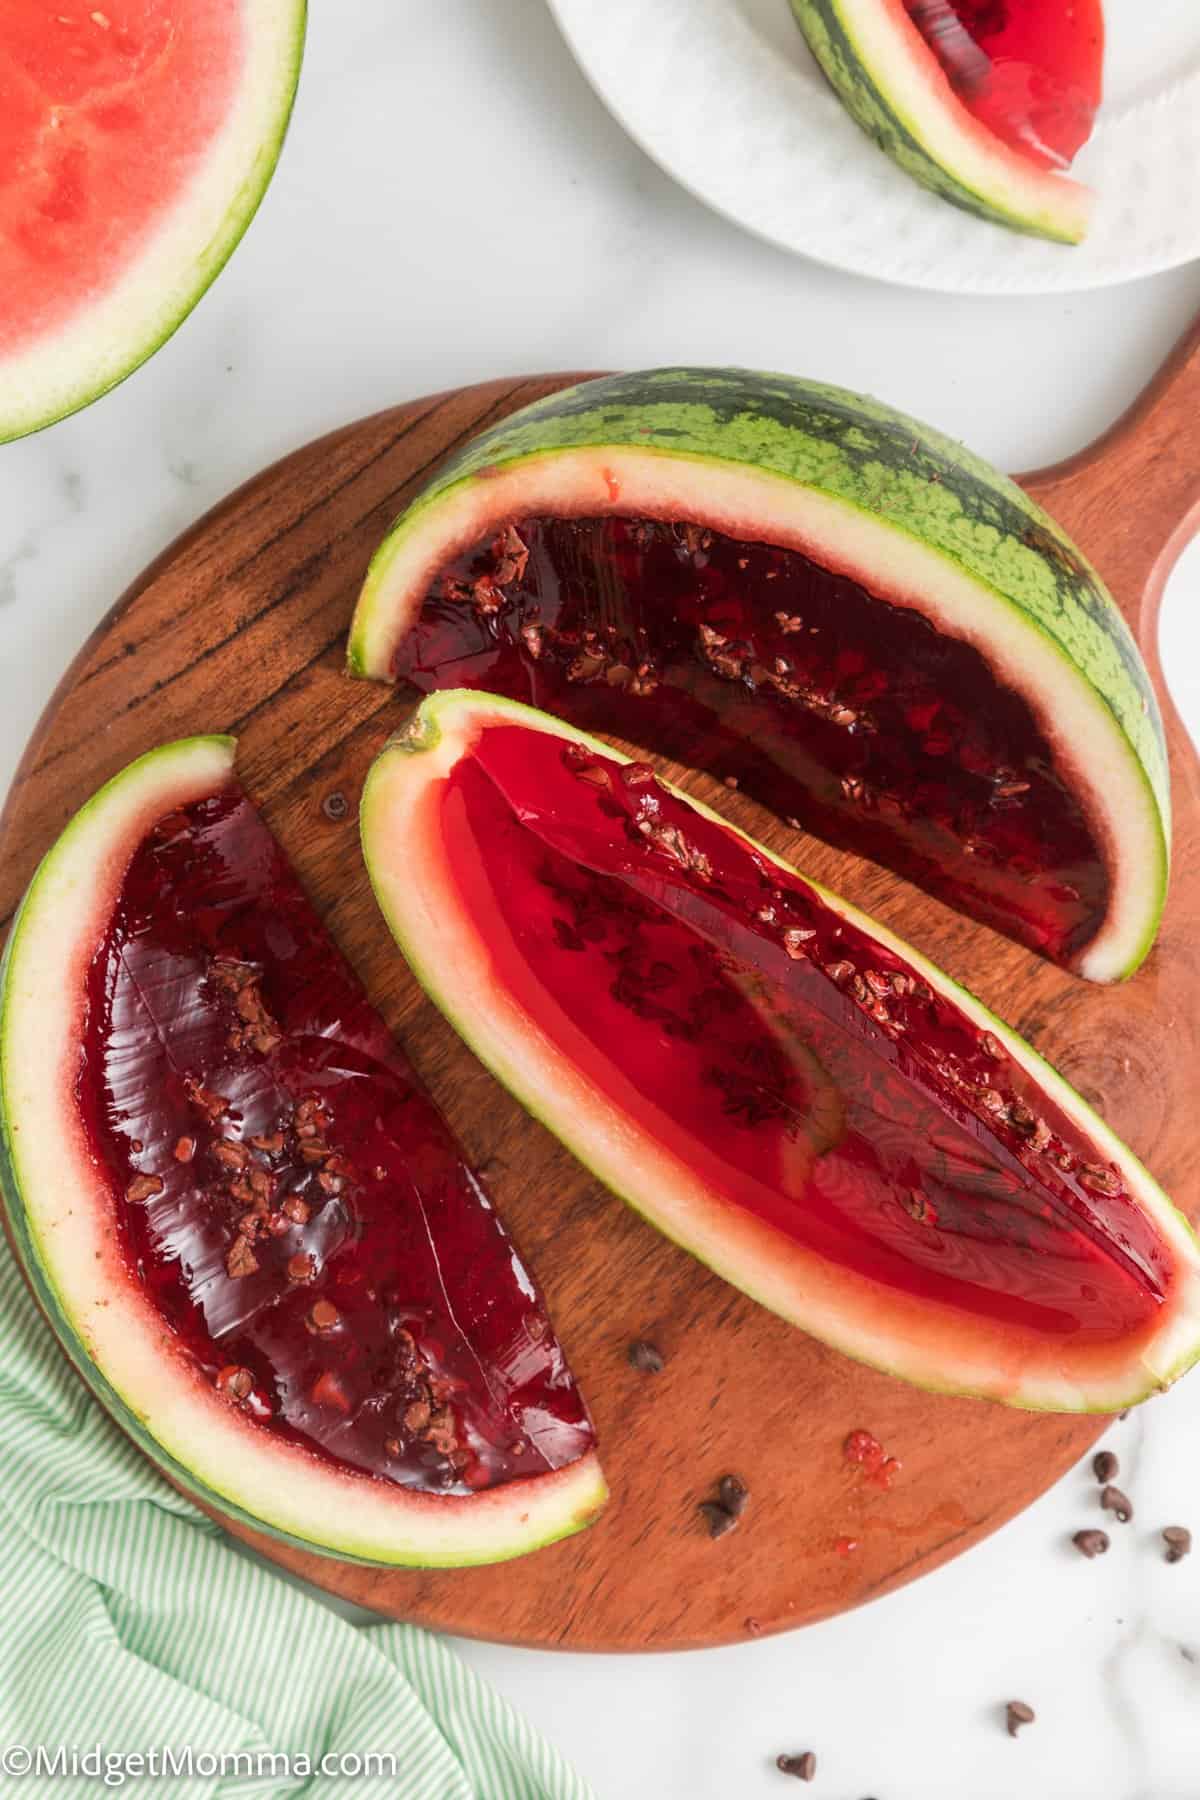 Fruit salad jelly watermelon recipe